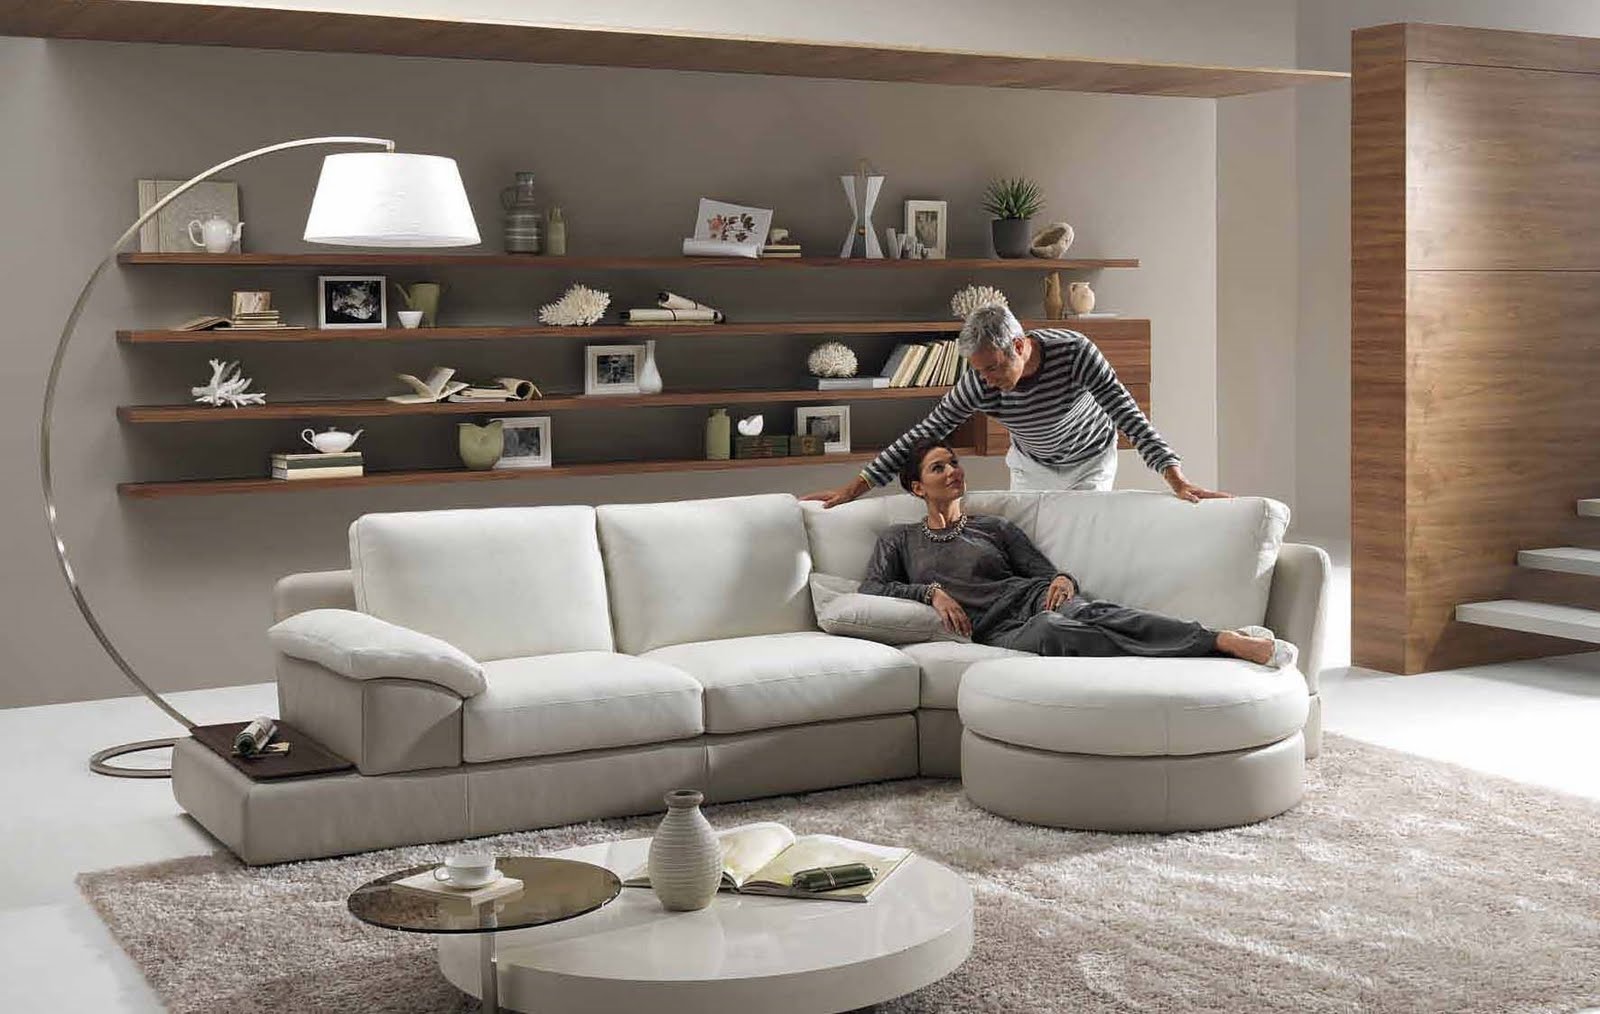 Future House Design: Modern Living Room Interior Design Styles ...